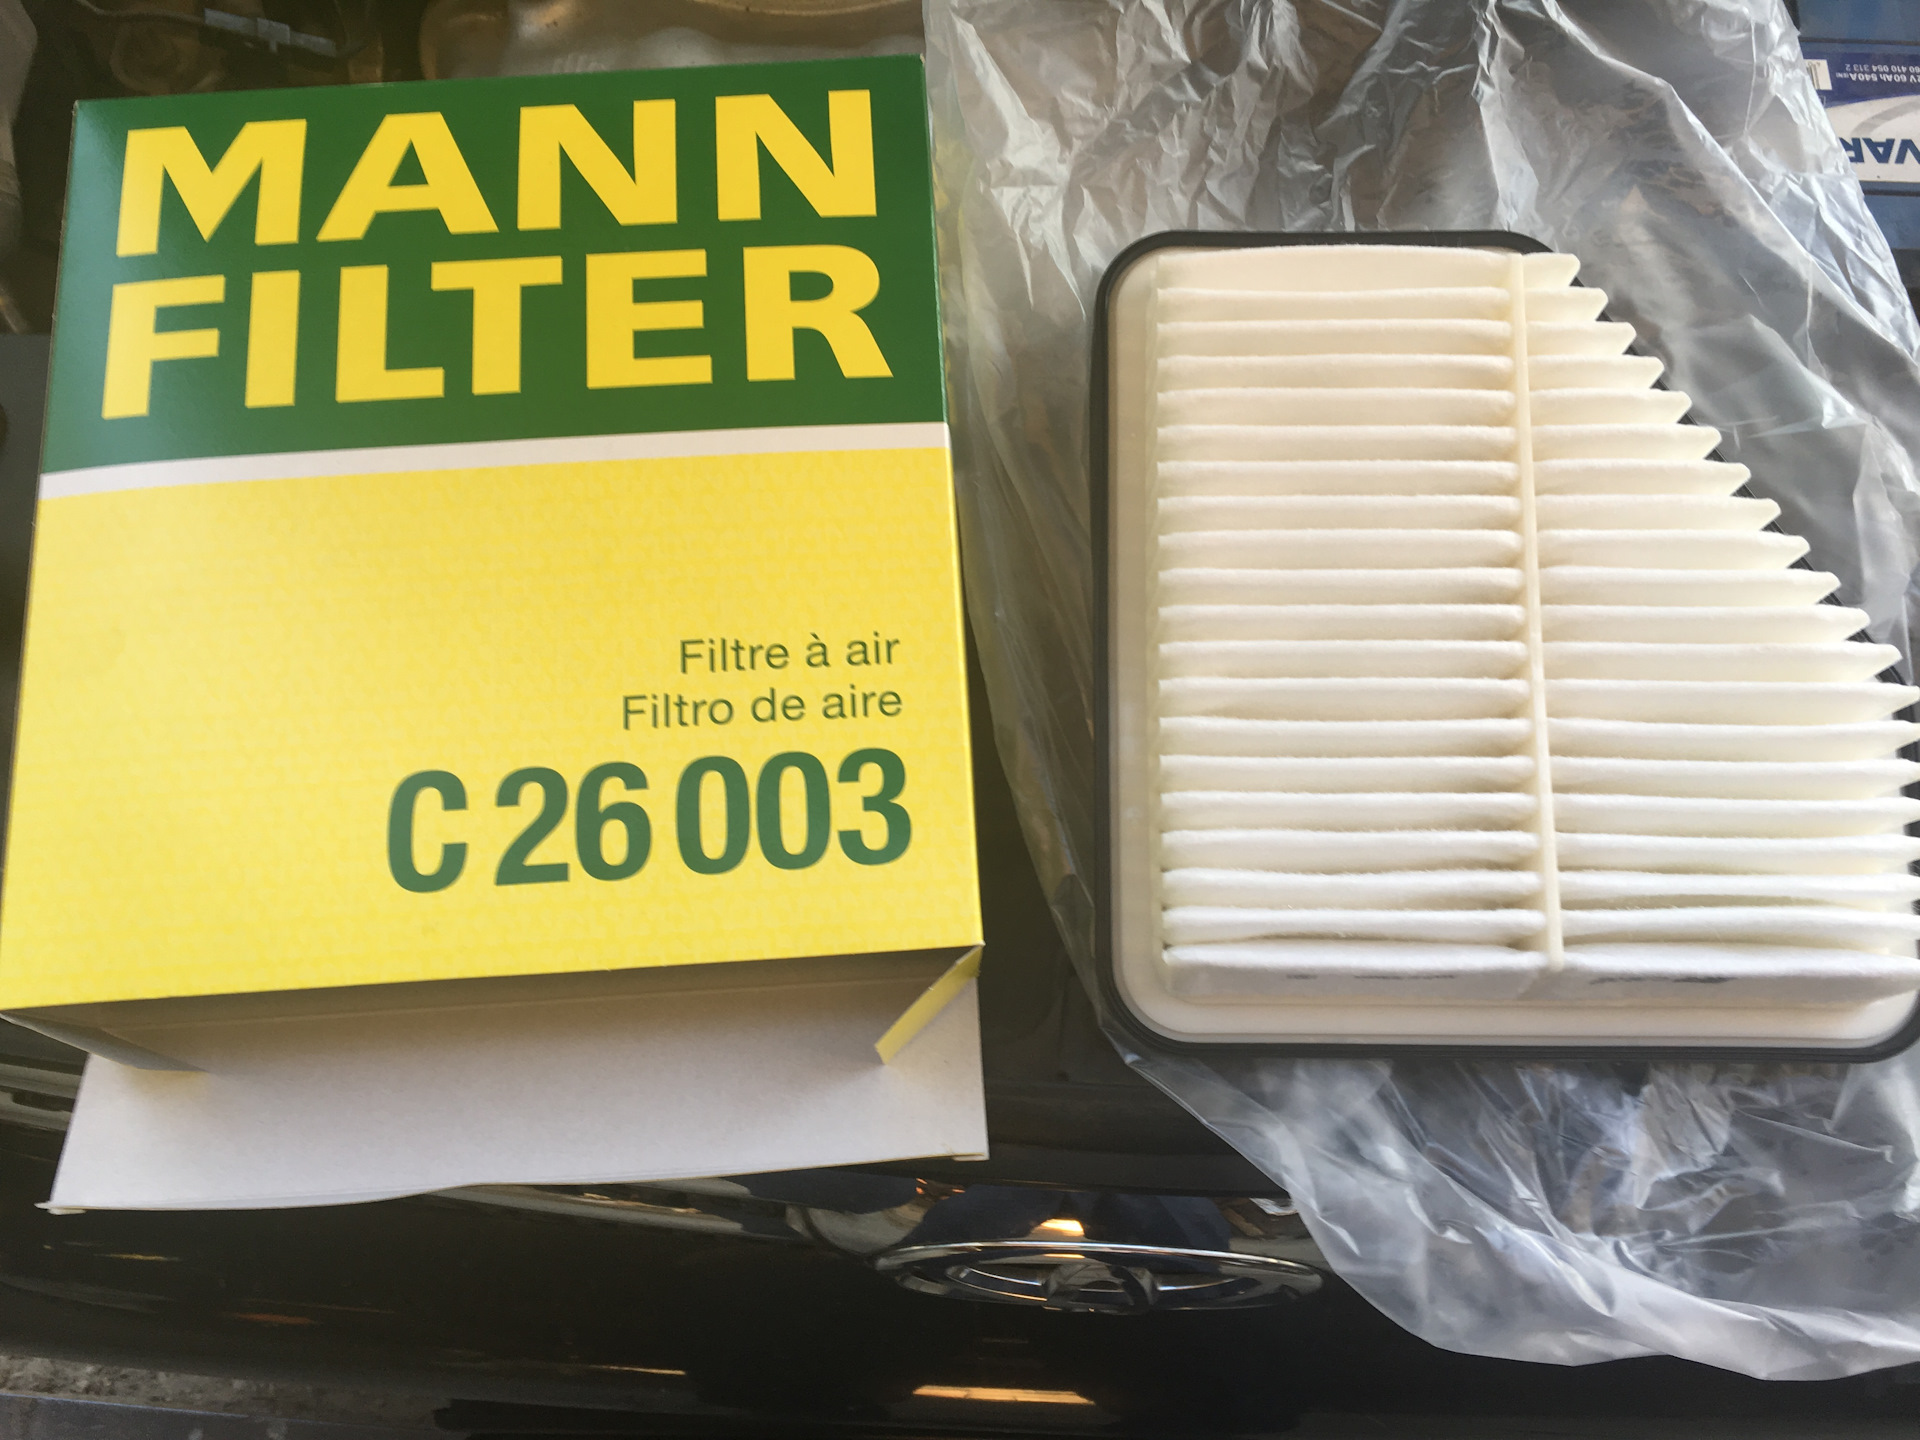 Mann Filter упаковка. Фильтр воздушный Champion 1400012. 5535005000 Фильтр воздушный. Фильтр воздушный 1000975877.